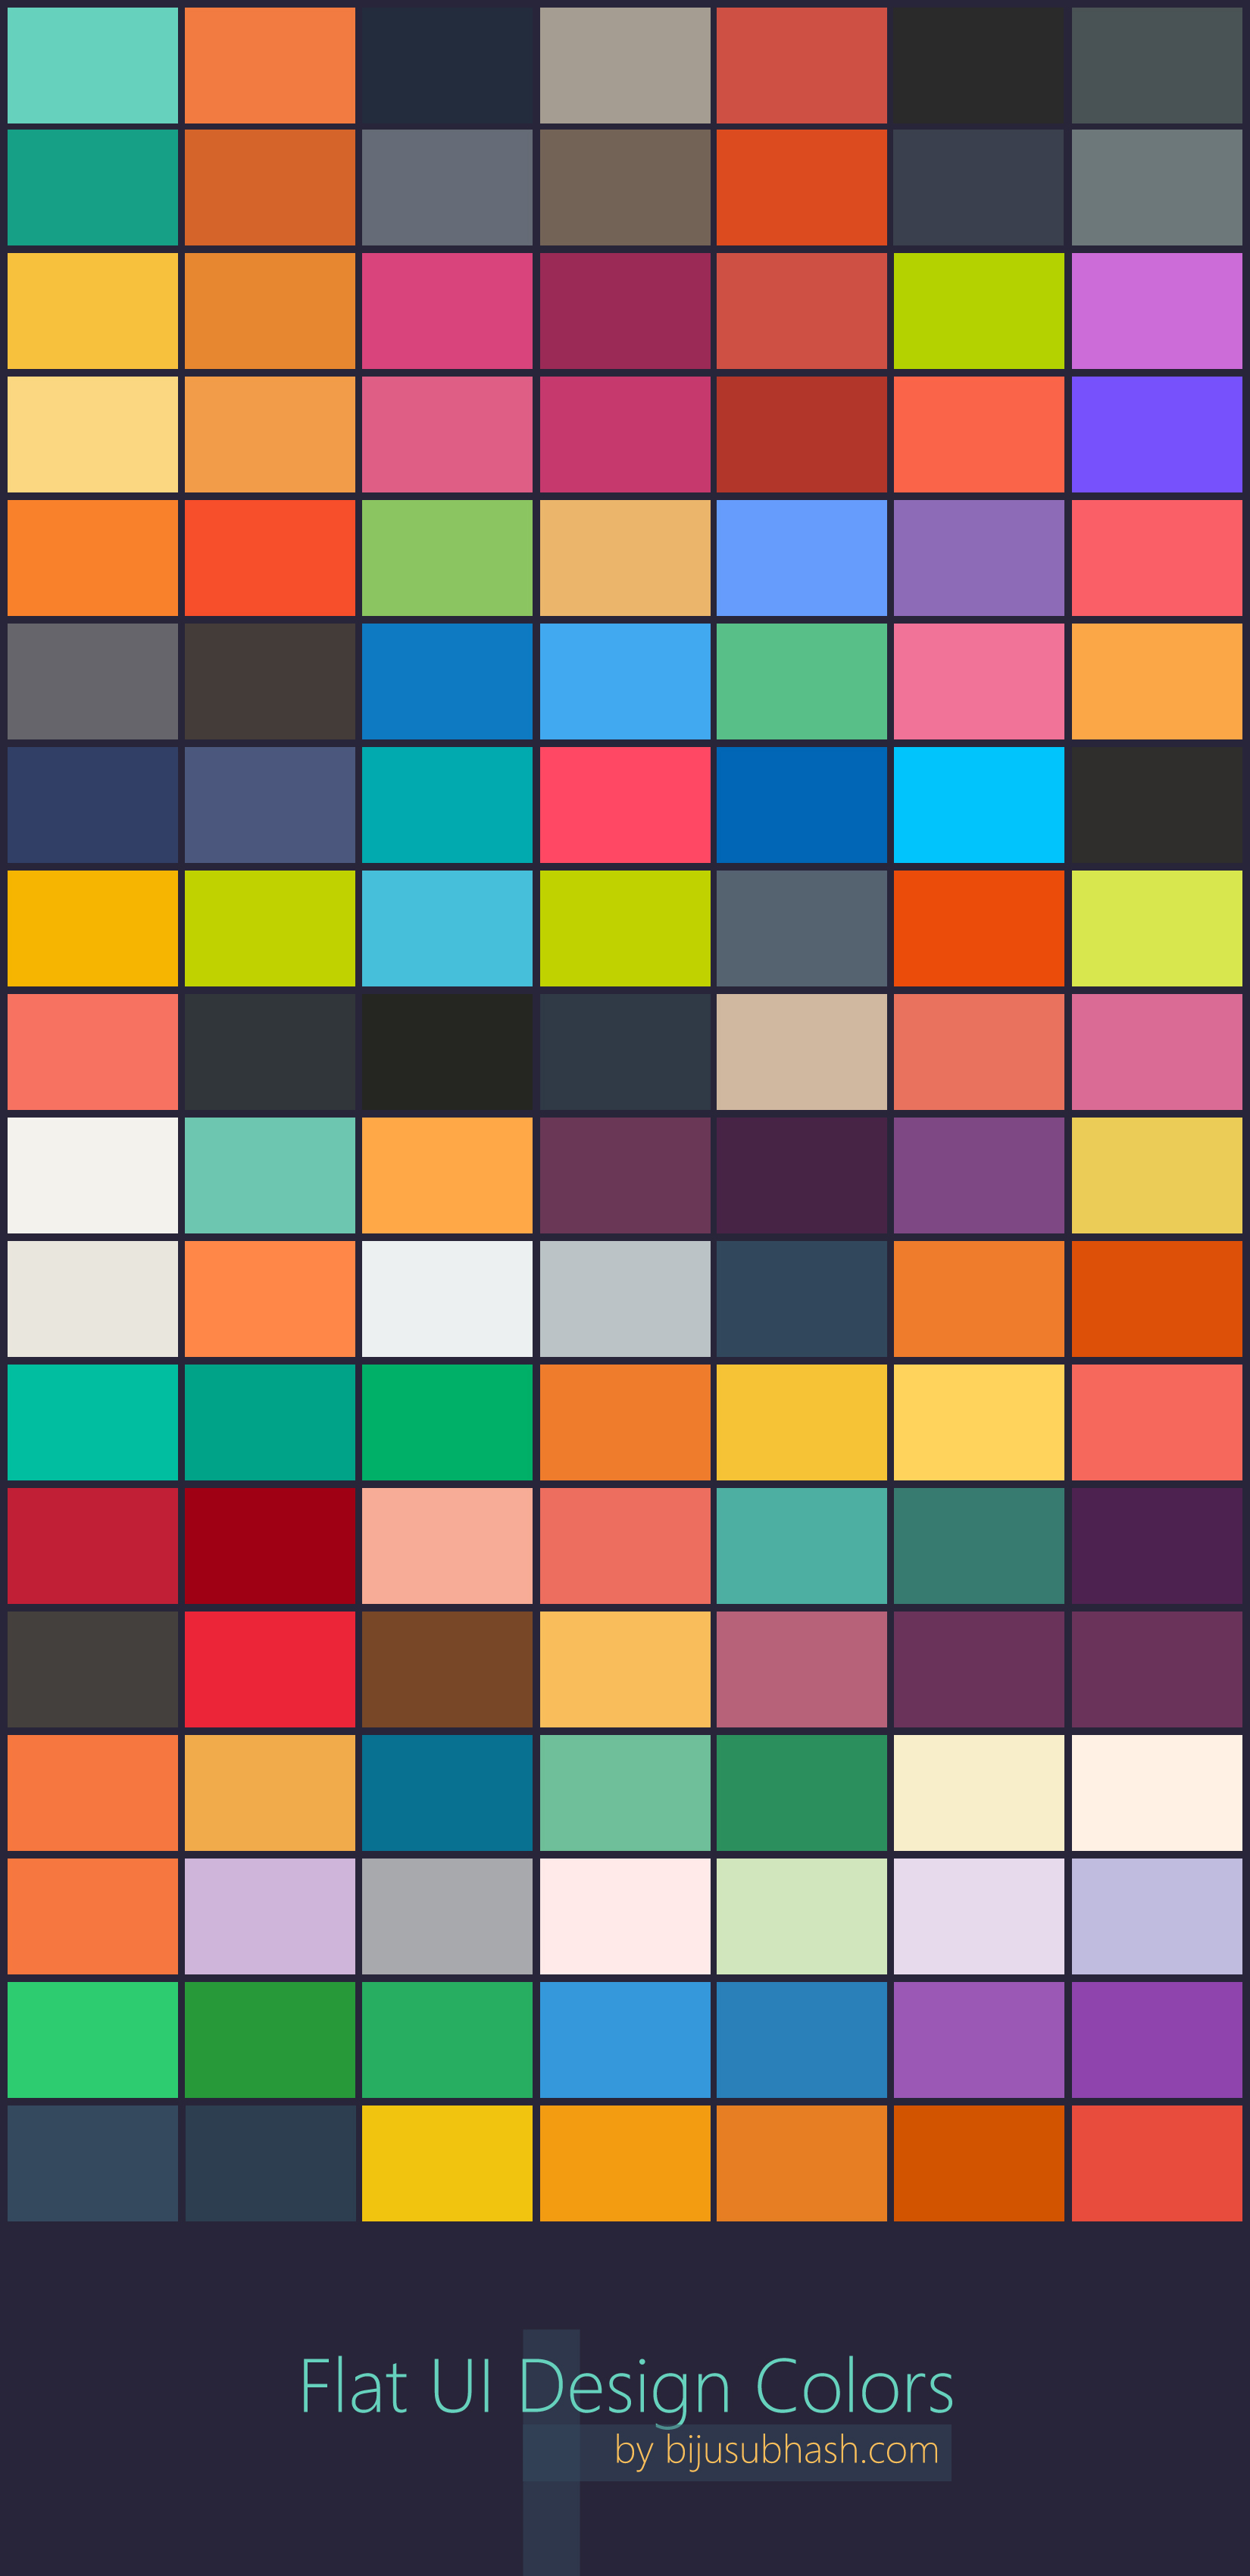 Flat UI Design Colors